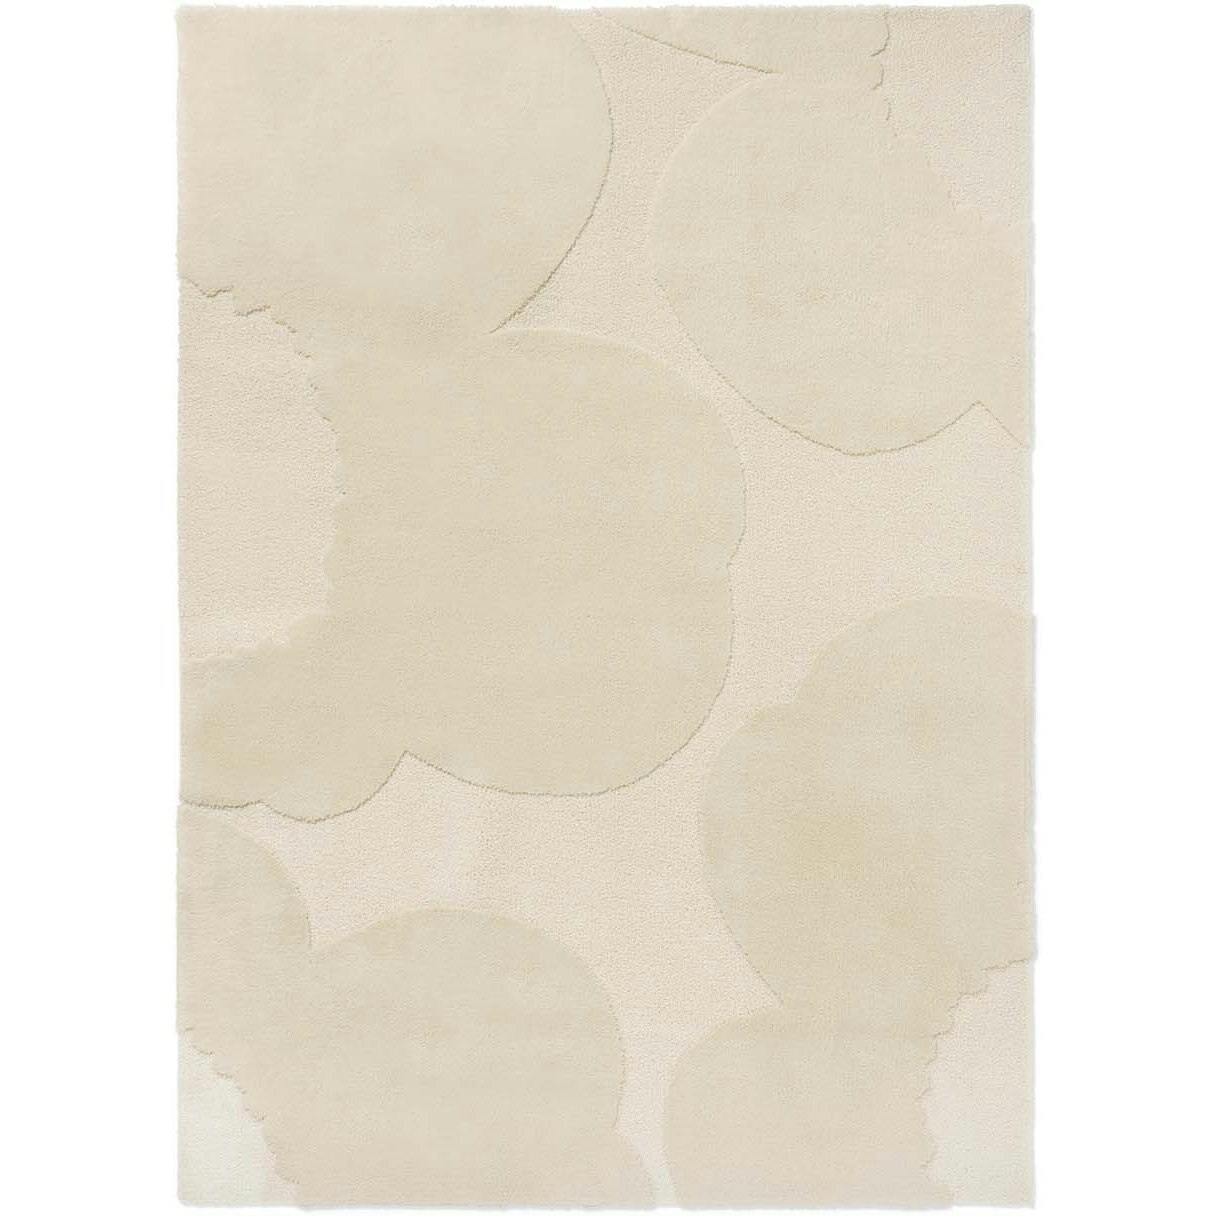 Marimekko Iso Unikko Rug 200x300 cm, Natural White